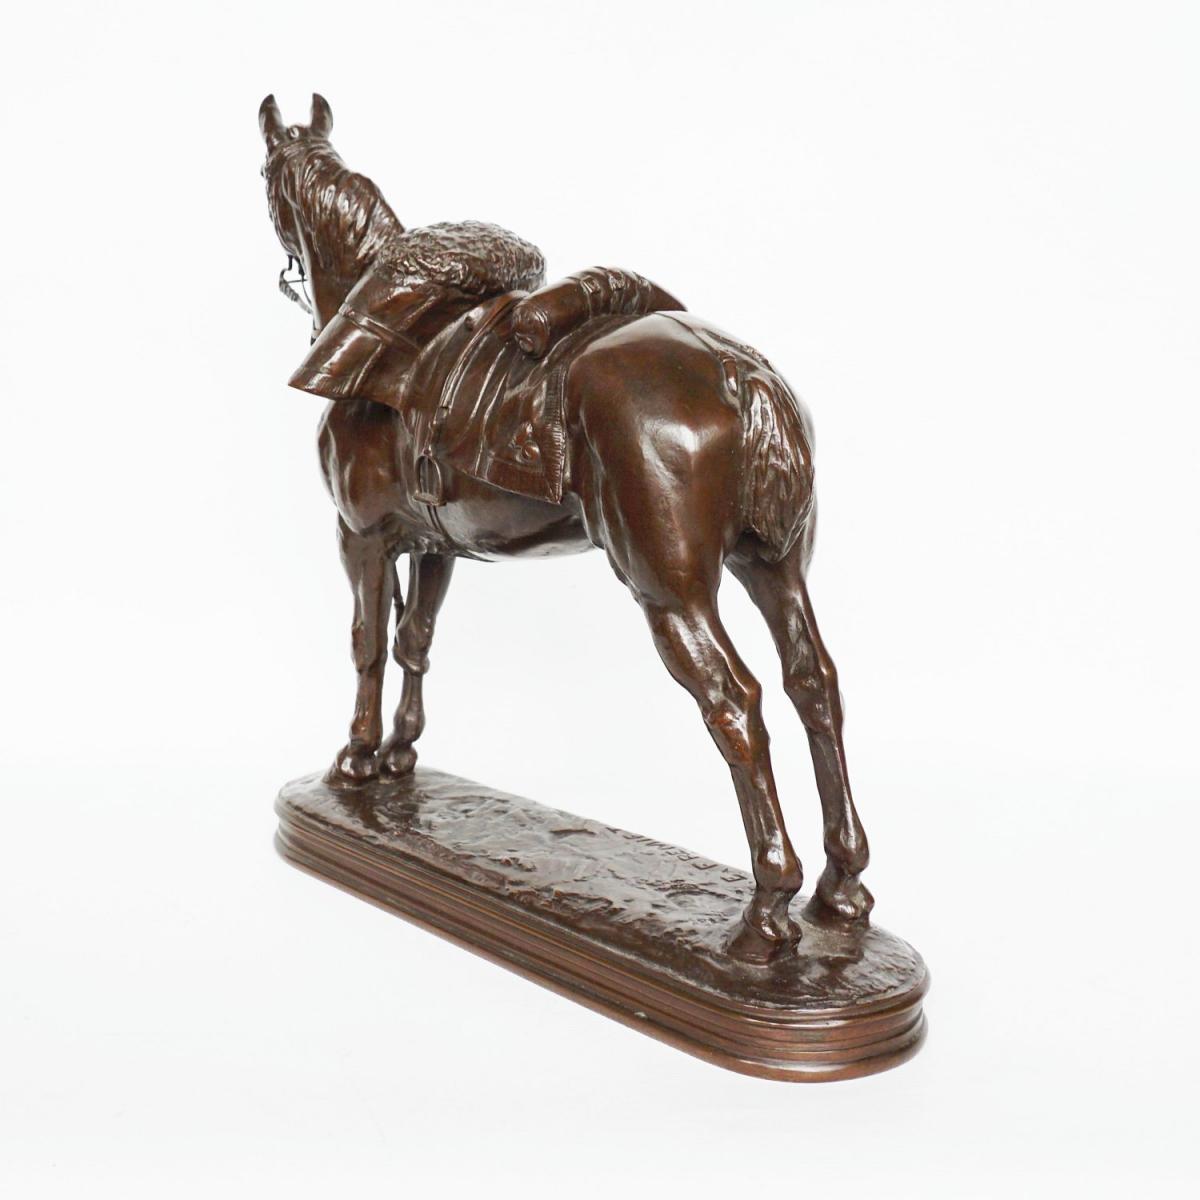 Emmanuel Fremiet (1824-1910), War Horse